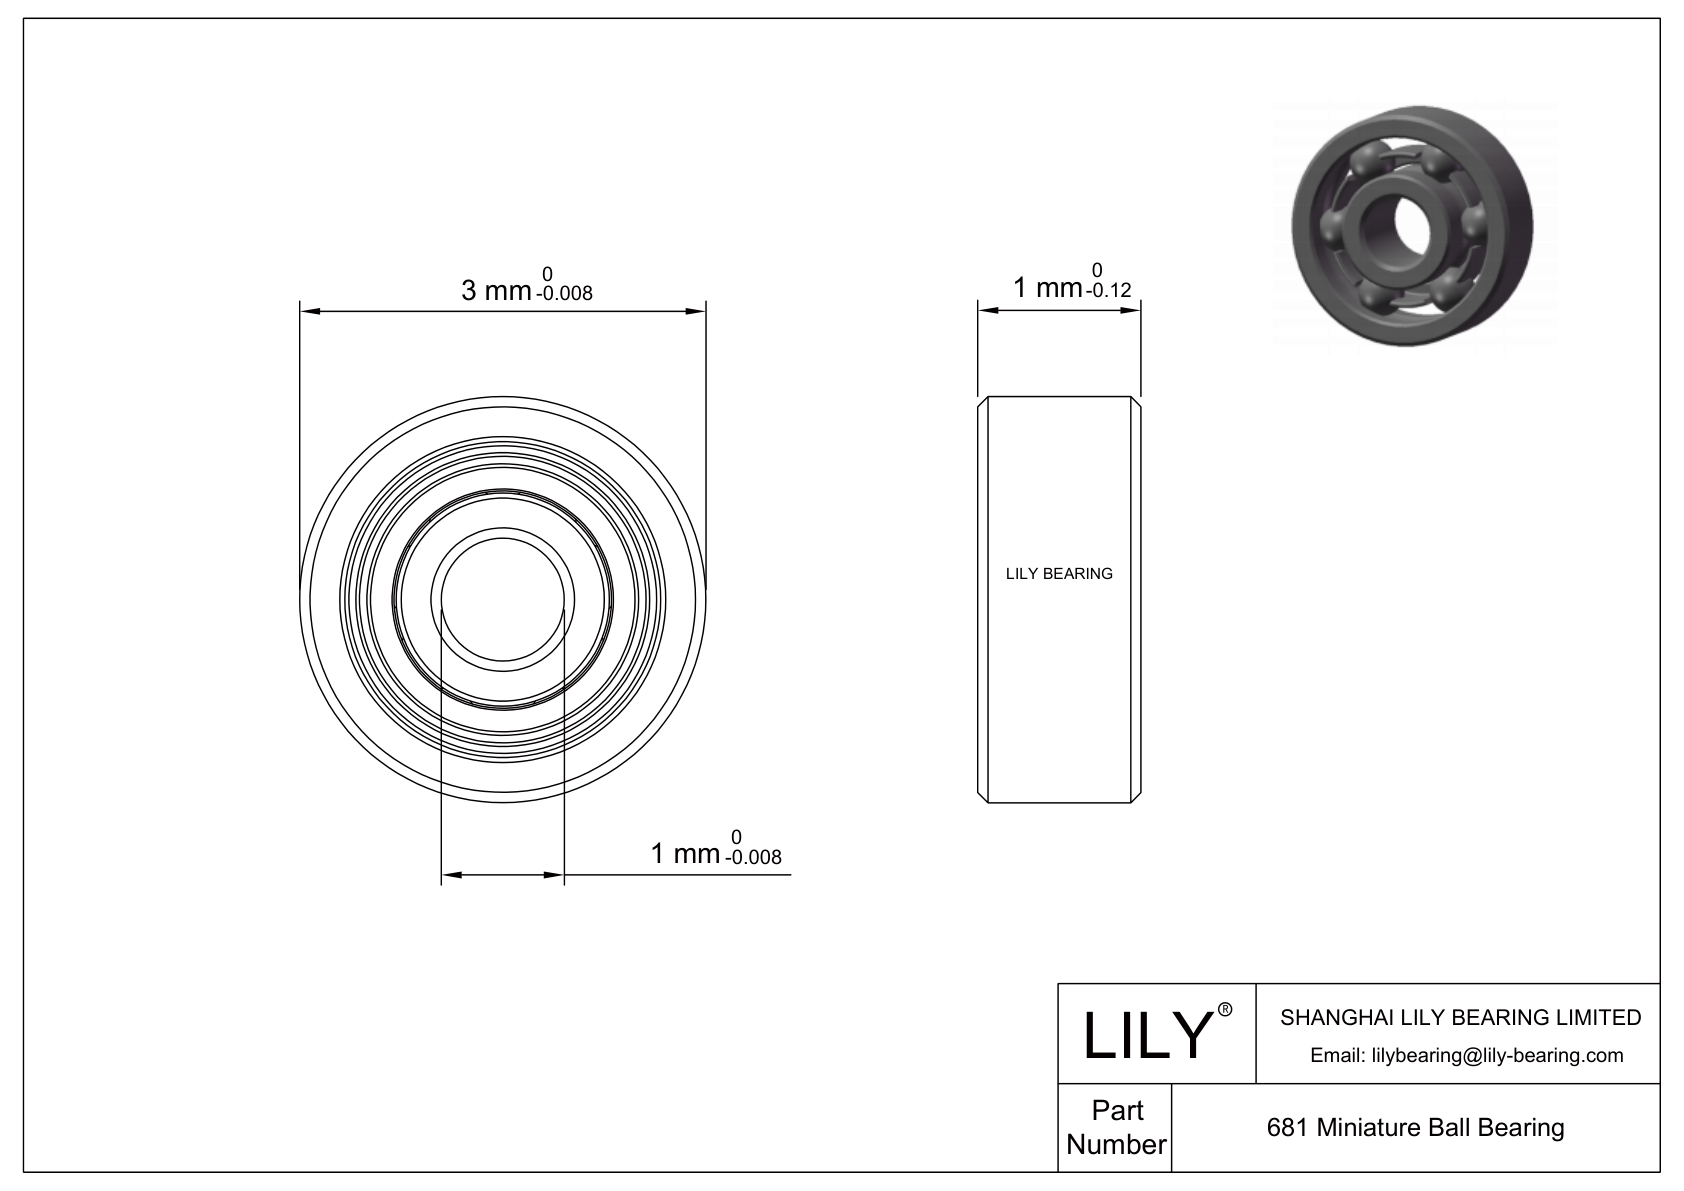 LILY-PU6818-4 Polyurethane Coated Bearing cad drawing